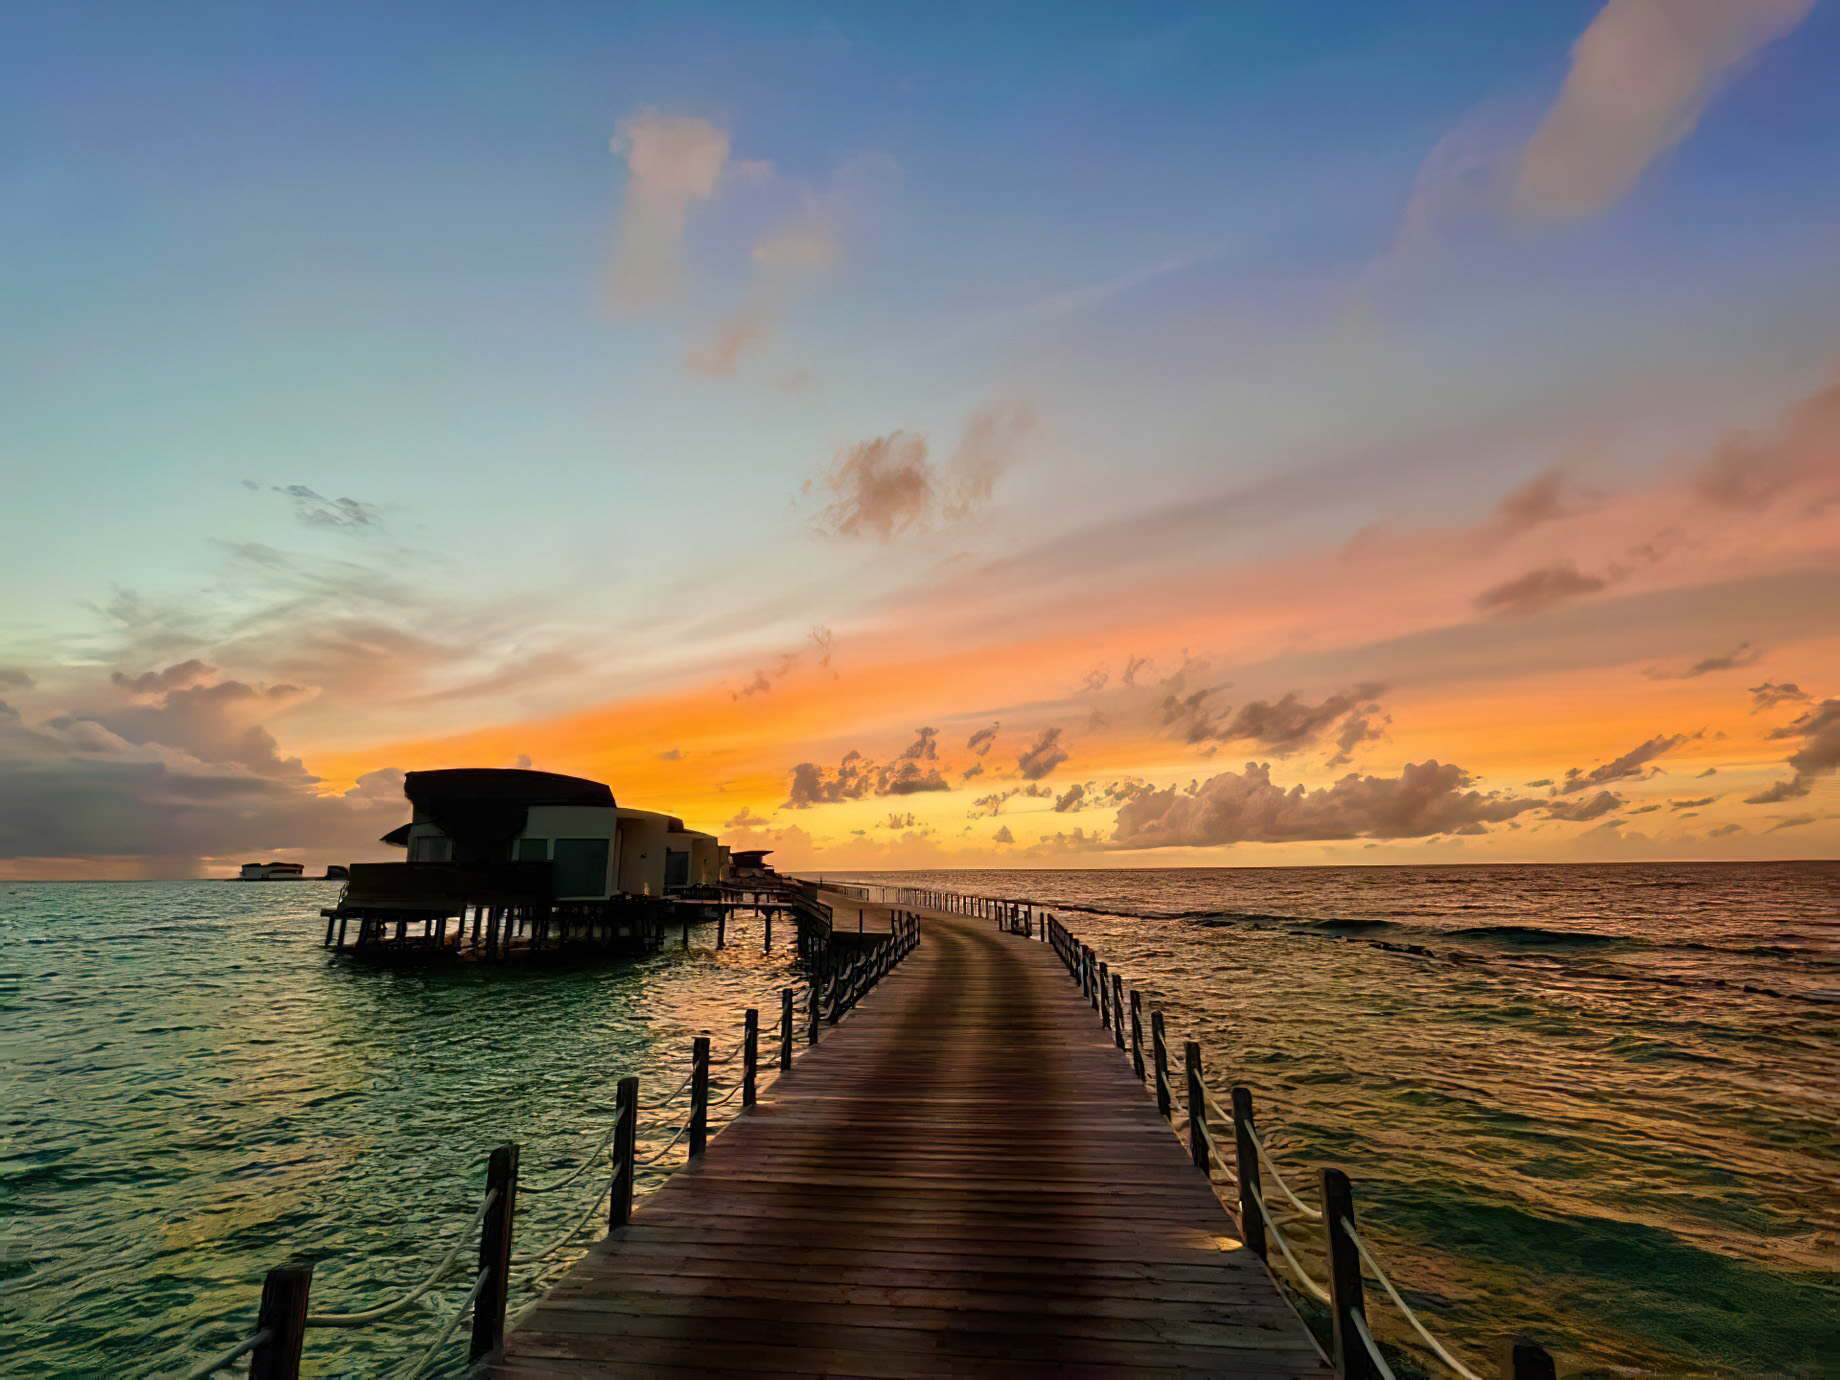 JW Marriott Maldives Resort & Spa – Shaviyani Atoll, Maldives – Resort Sunset